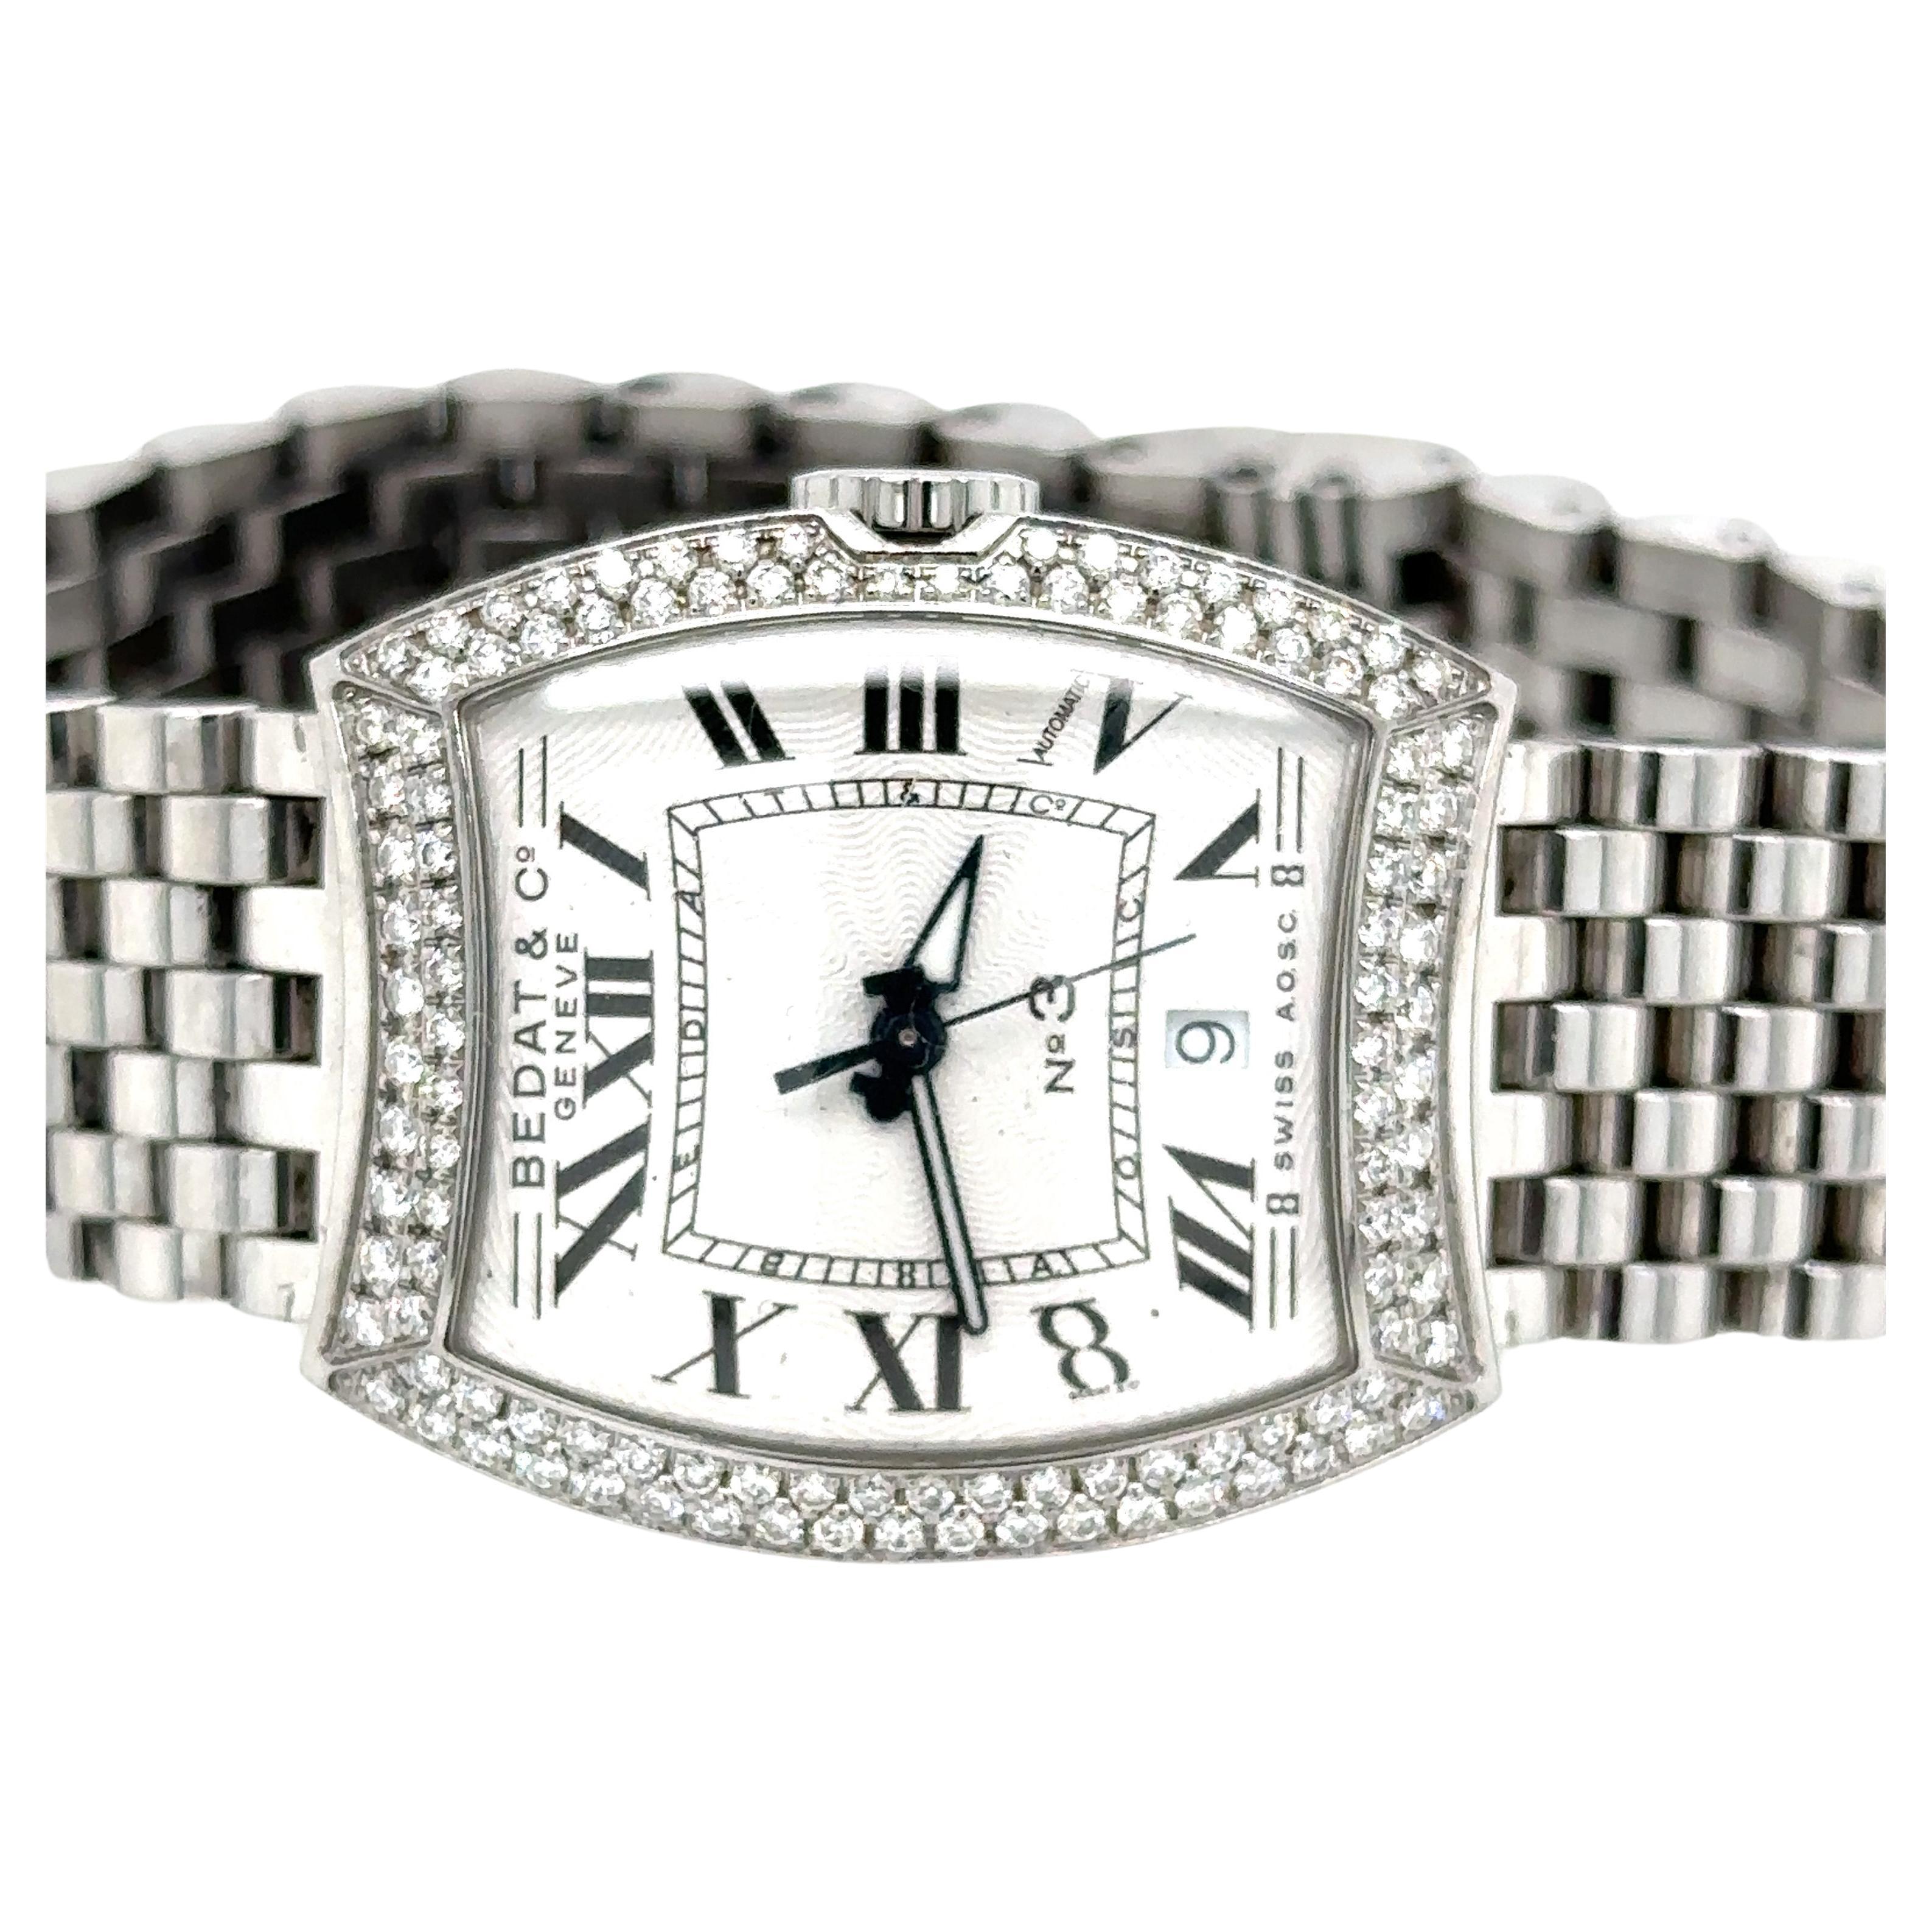 BEDAT & Co Tonneau-shaped 113diamond bezel 0.95cttw Geneva Watch Retail: $10750